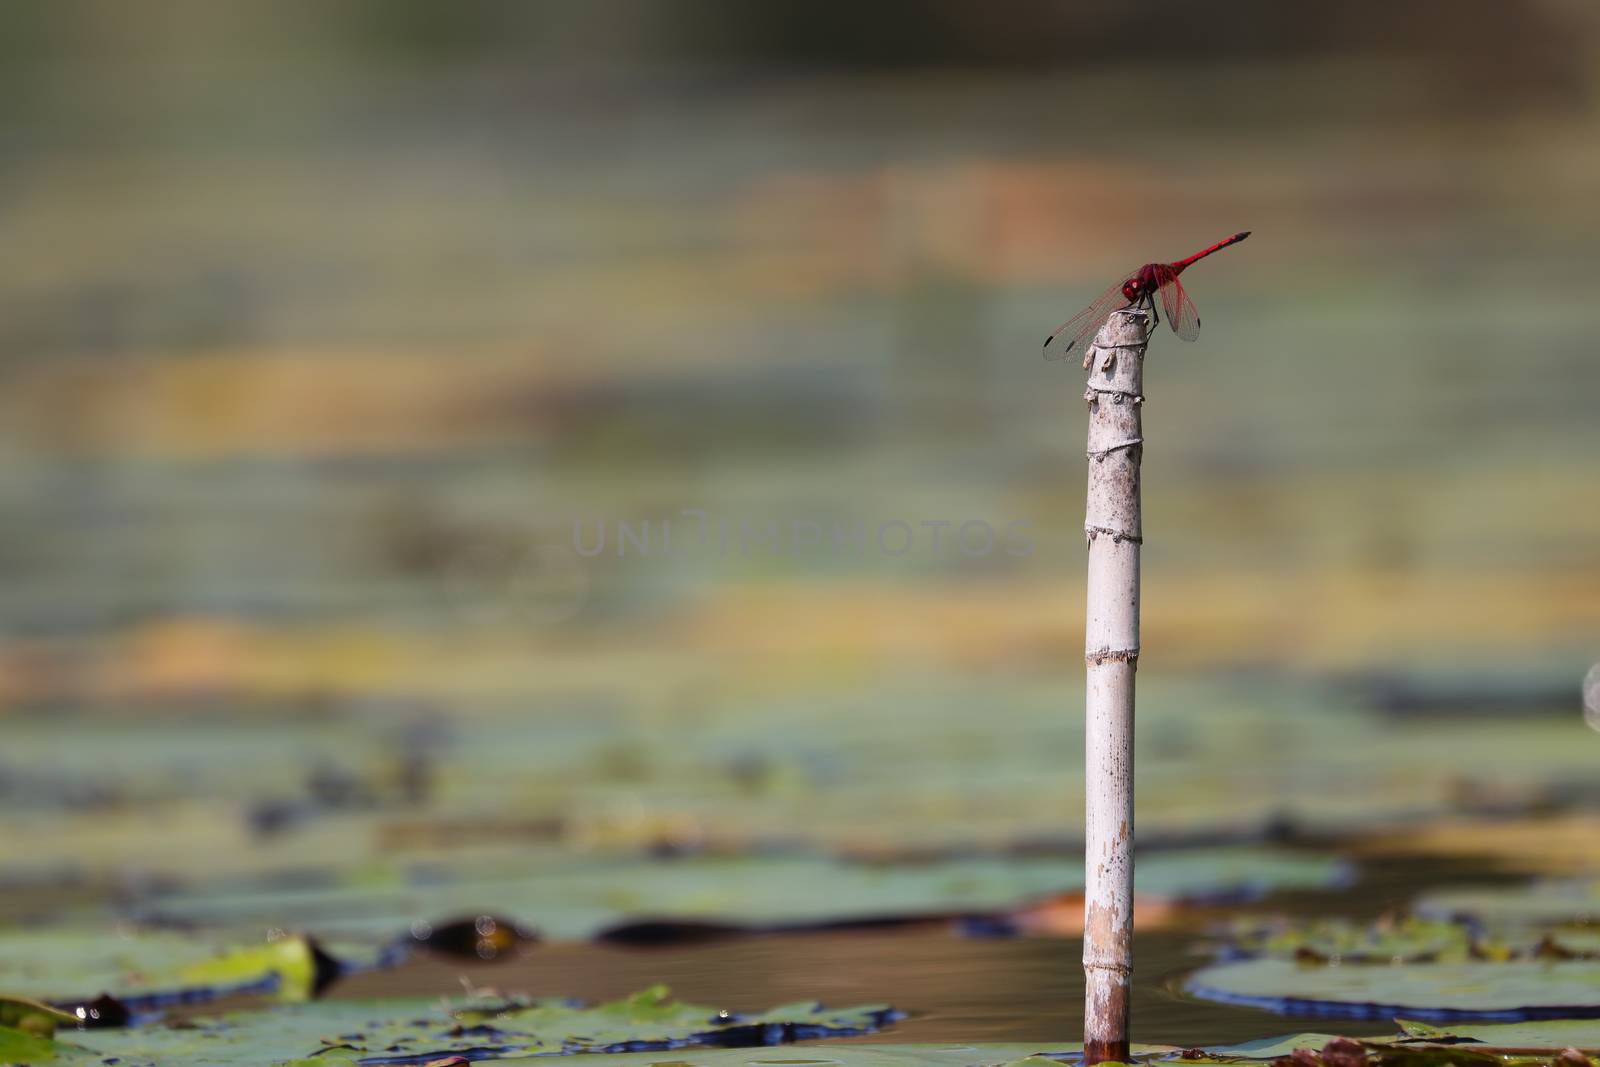 Red-Veined Dropwing Dragonfly On Reed Stalk (Trithemis arteriosa) by jjvanginkel